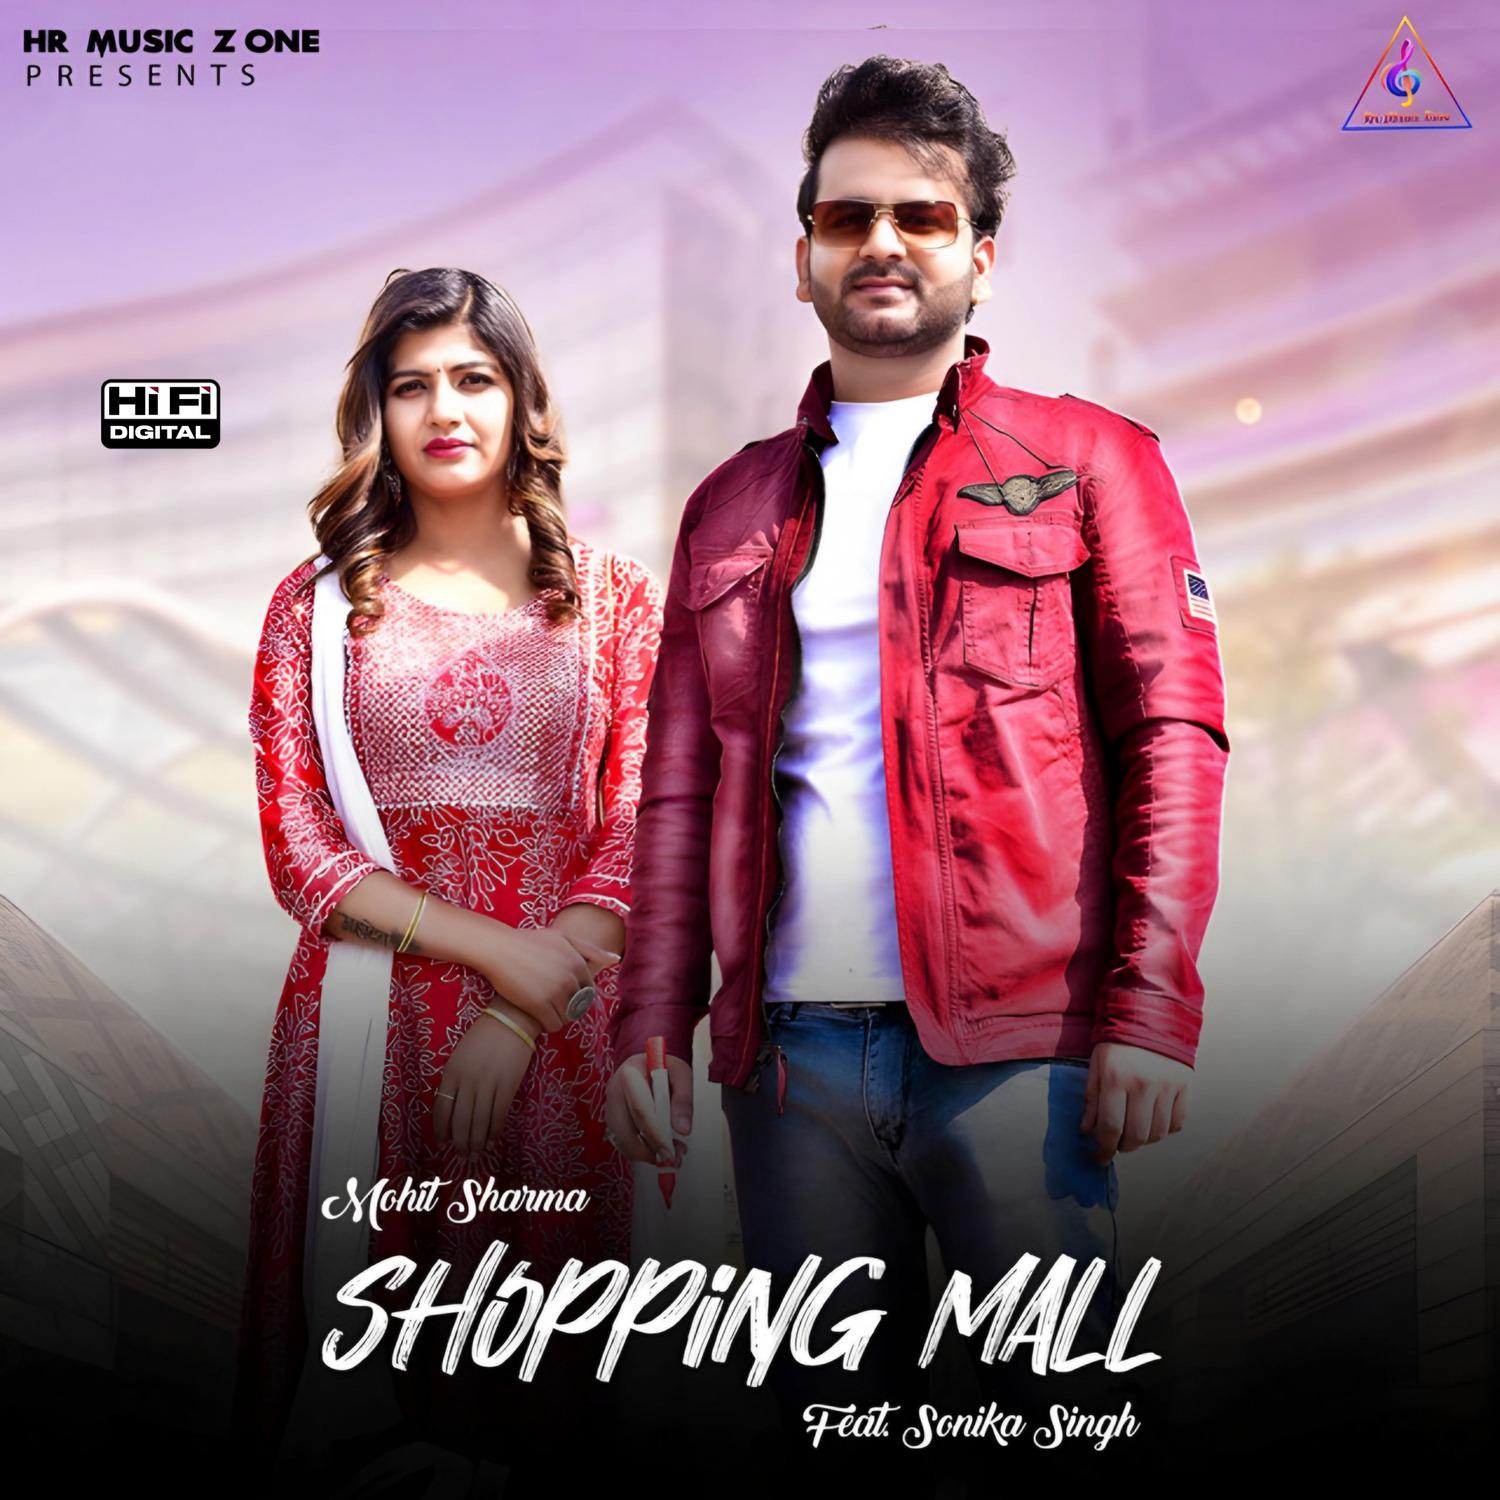 Mohit Sharma - Shopping Mall